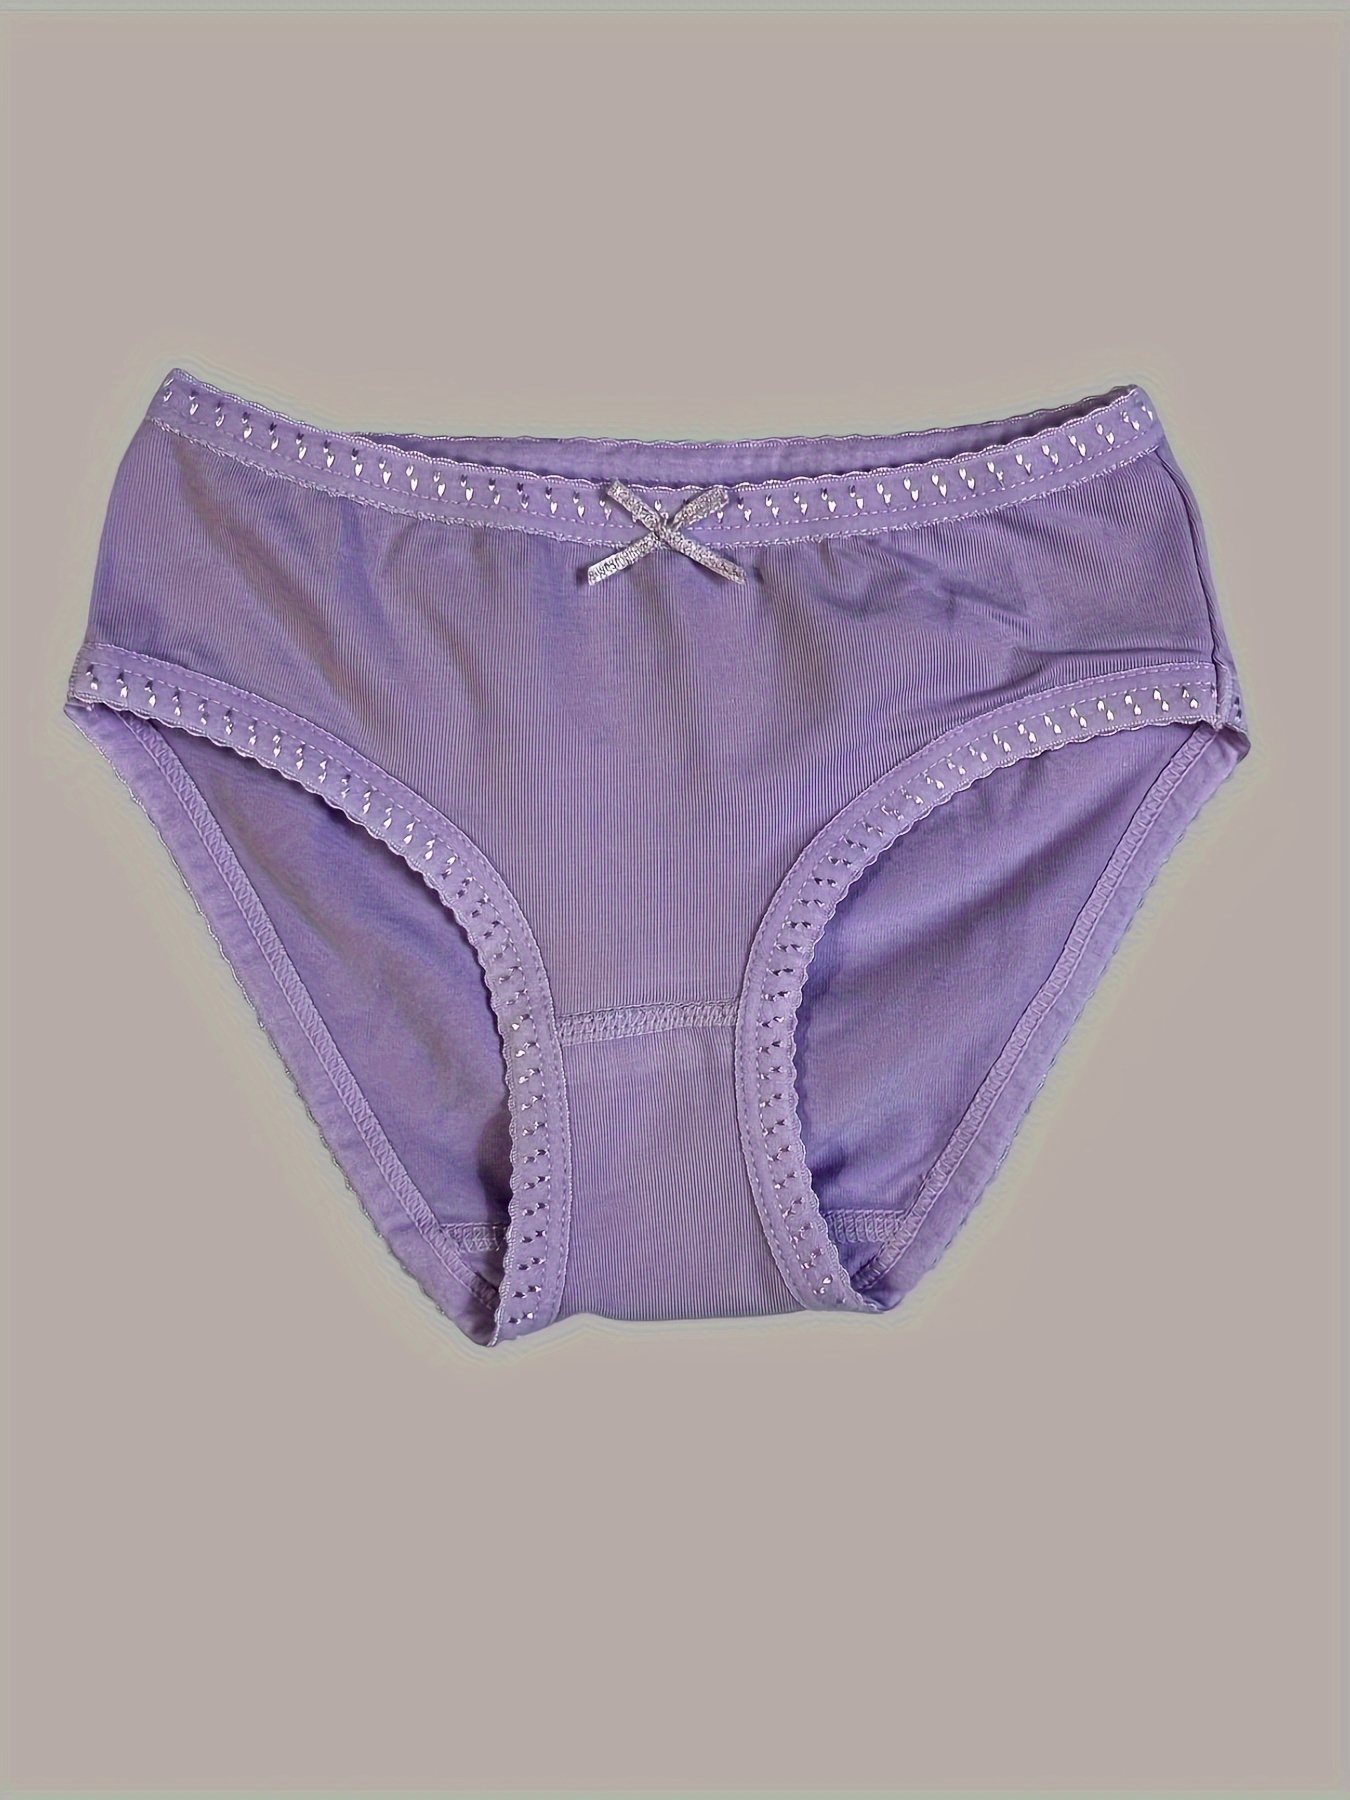 Cotton Pants Women Underwear Costume Bright Coloured Knickers